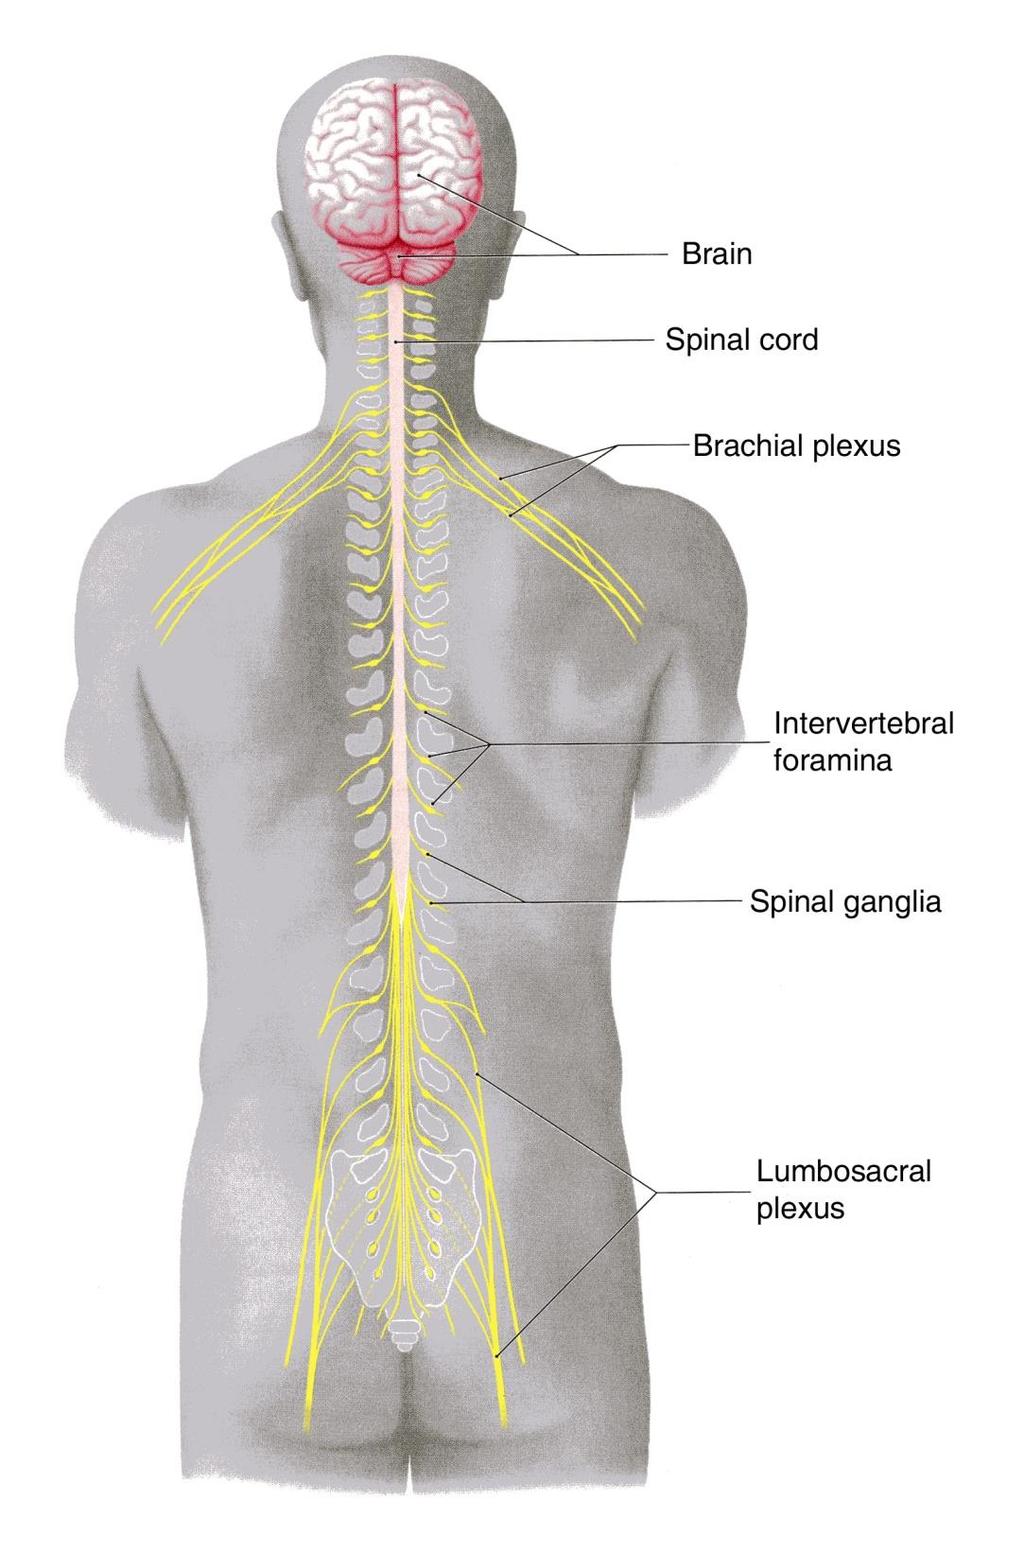 Peripheral NS Spinal nerves supplying the upper or lower limbs form plexuses e.g. brachial or lumbar plexus.